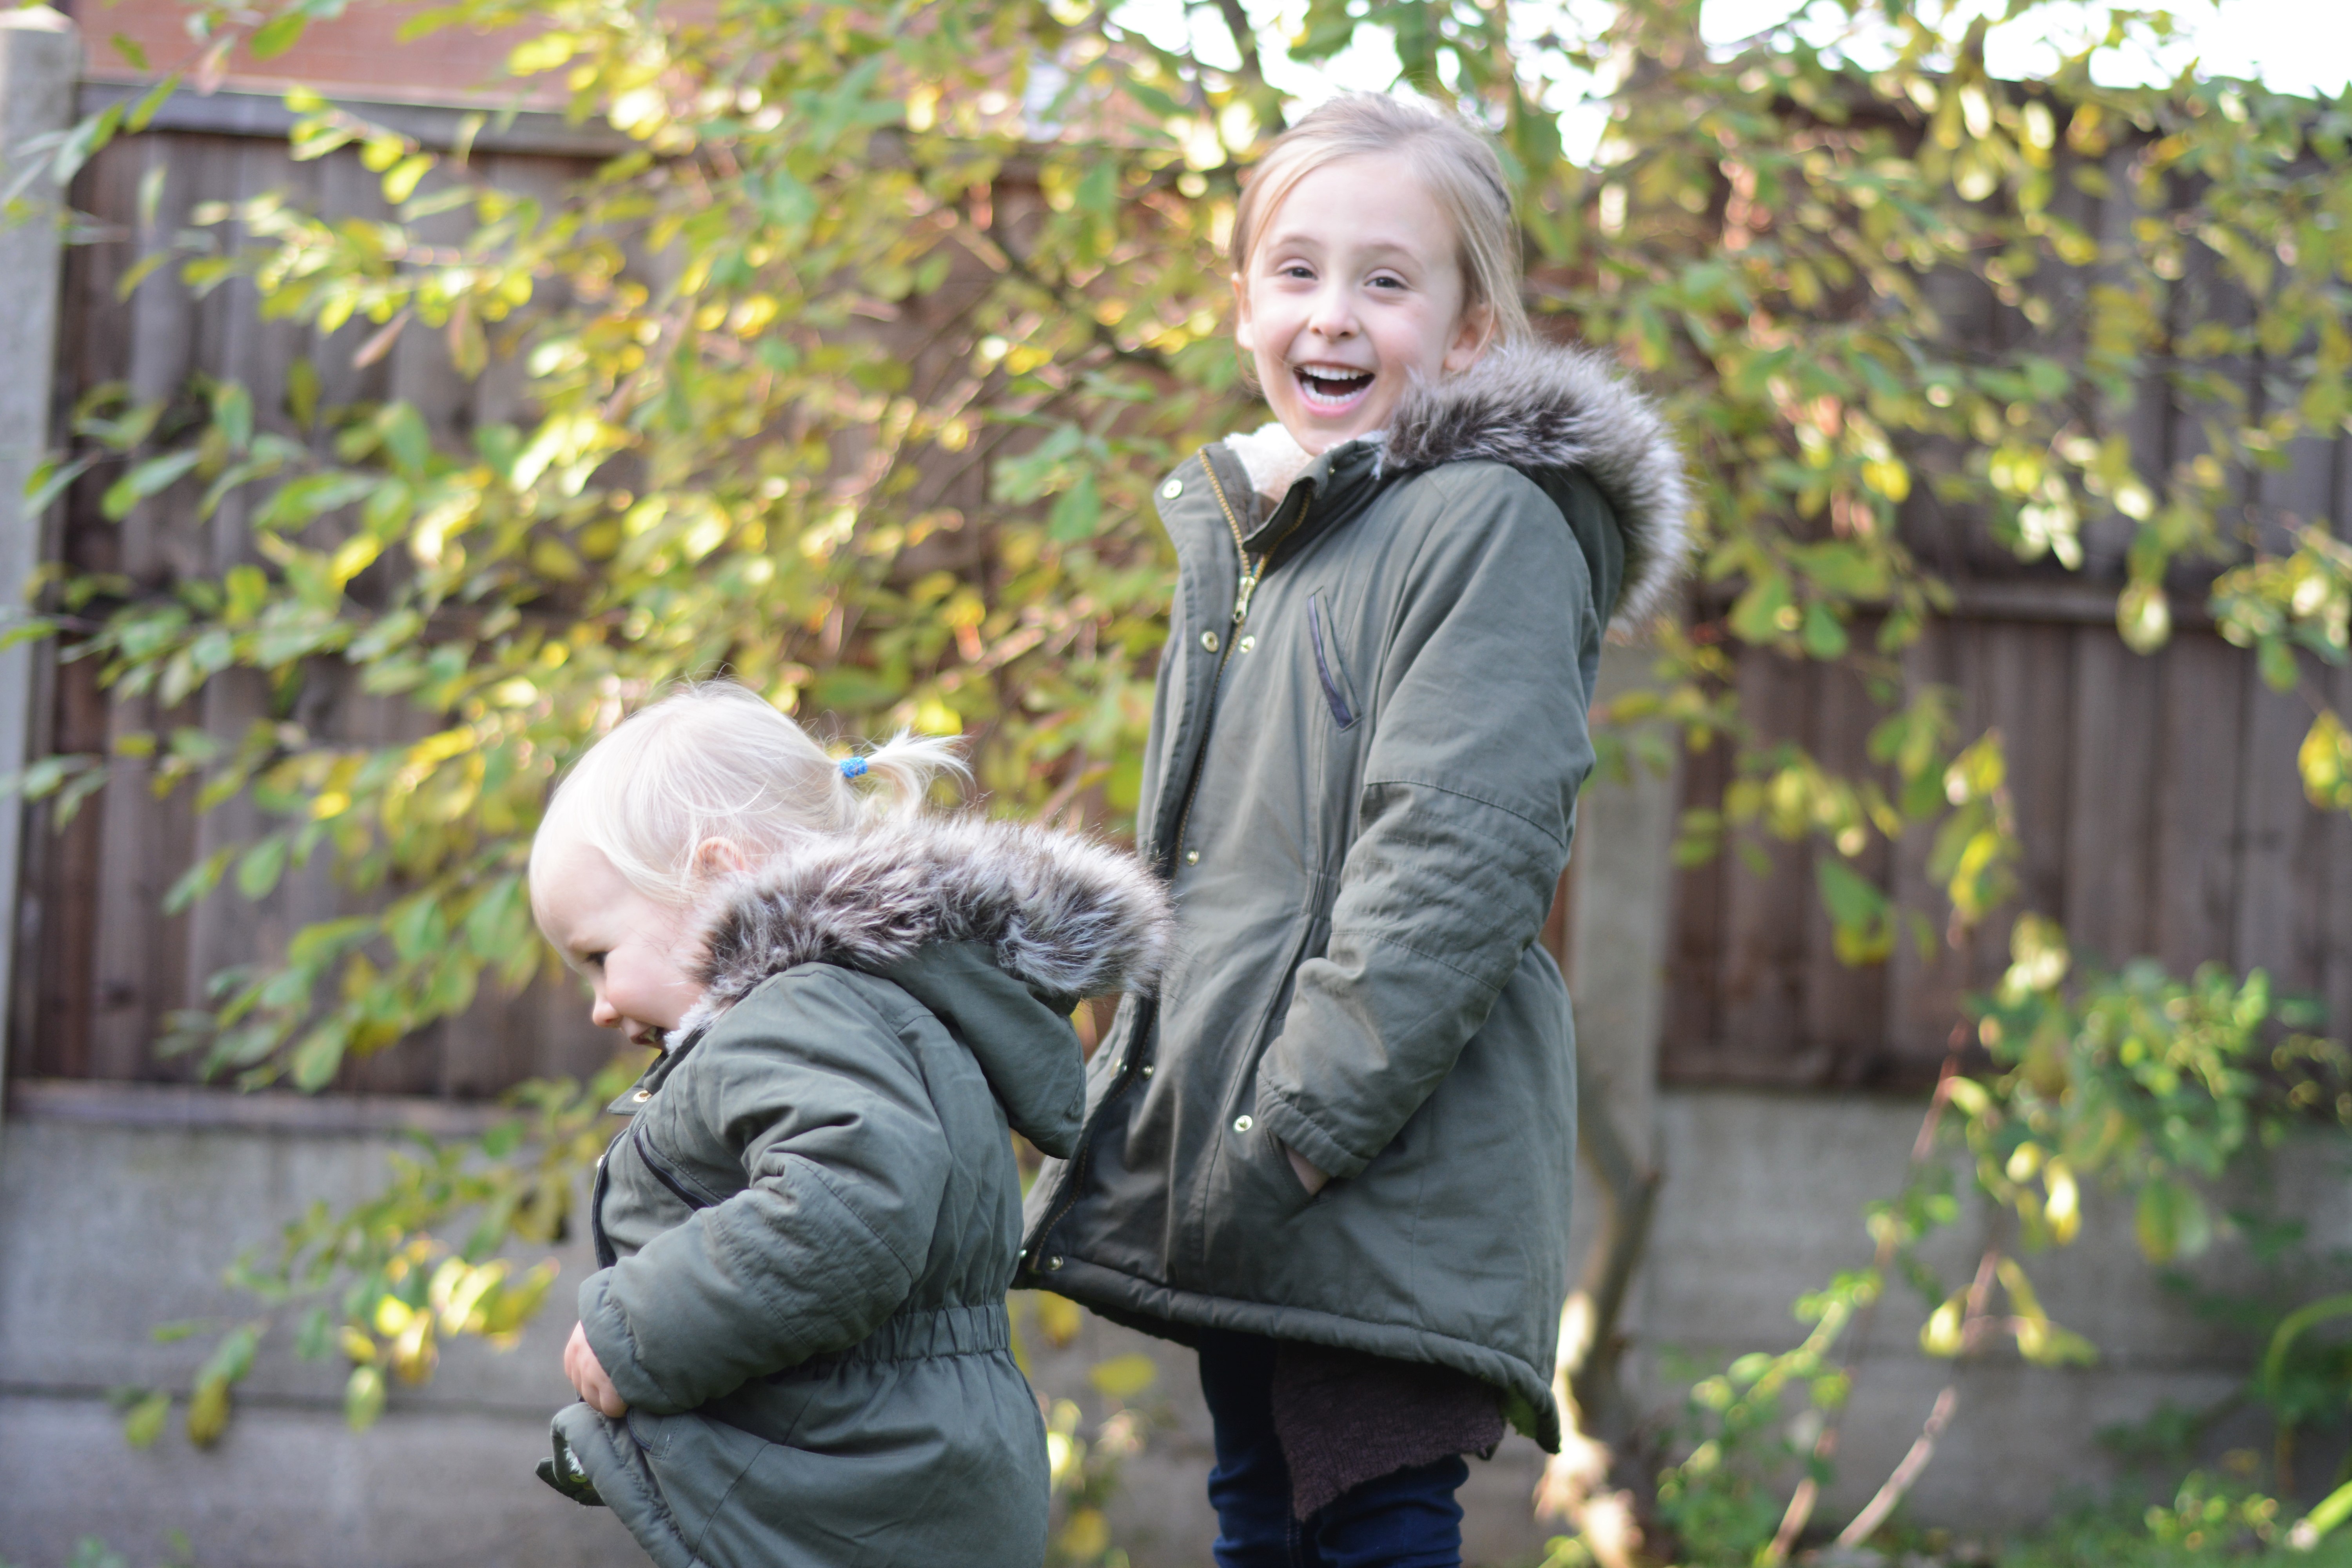 Sisters November in matching coats 